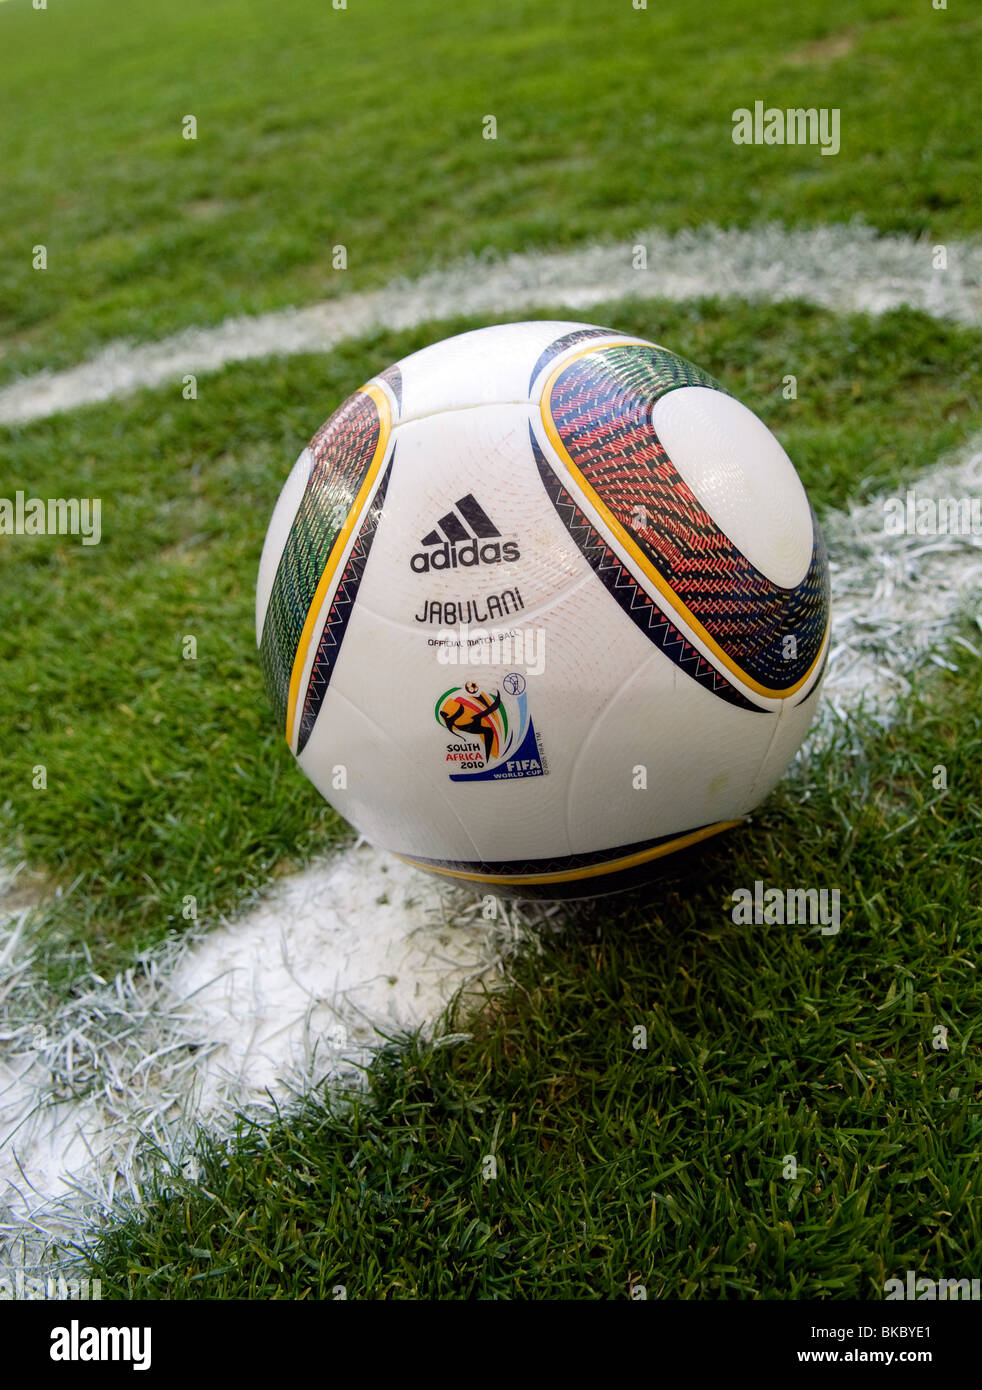 Adidas Ball Jabulani Match Soccer South Africa FIFA World Cup 2010